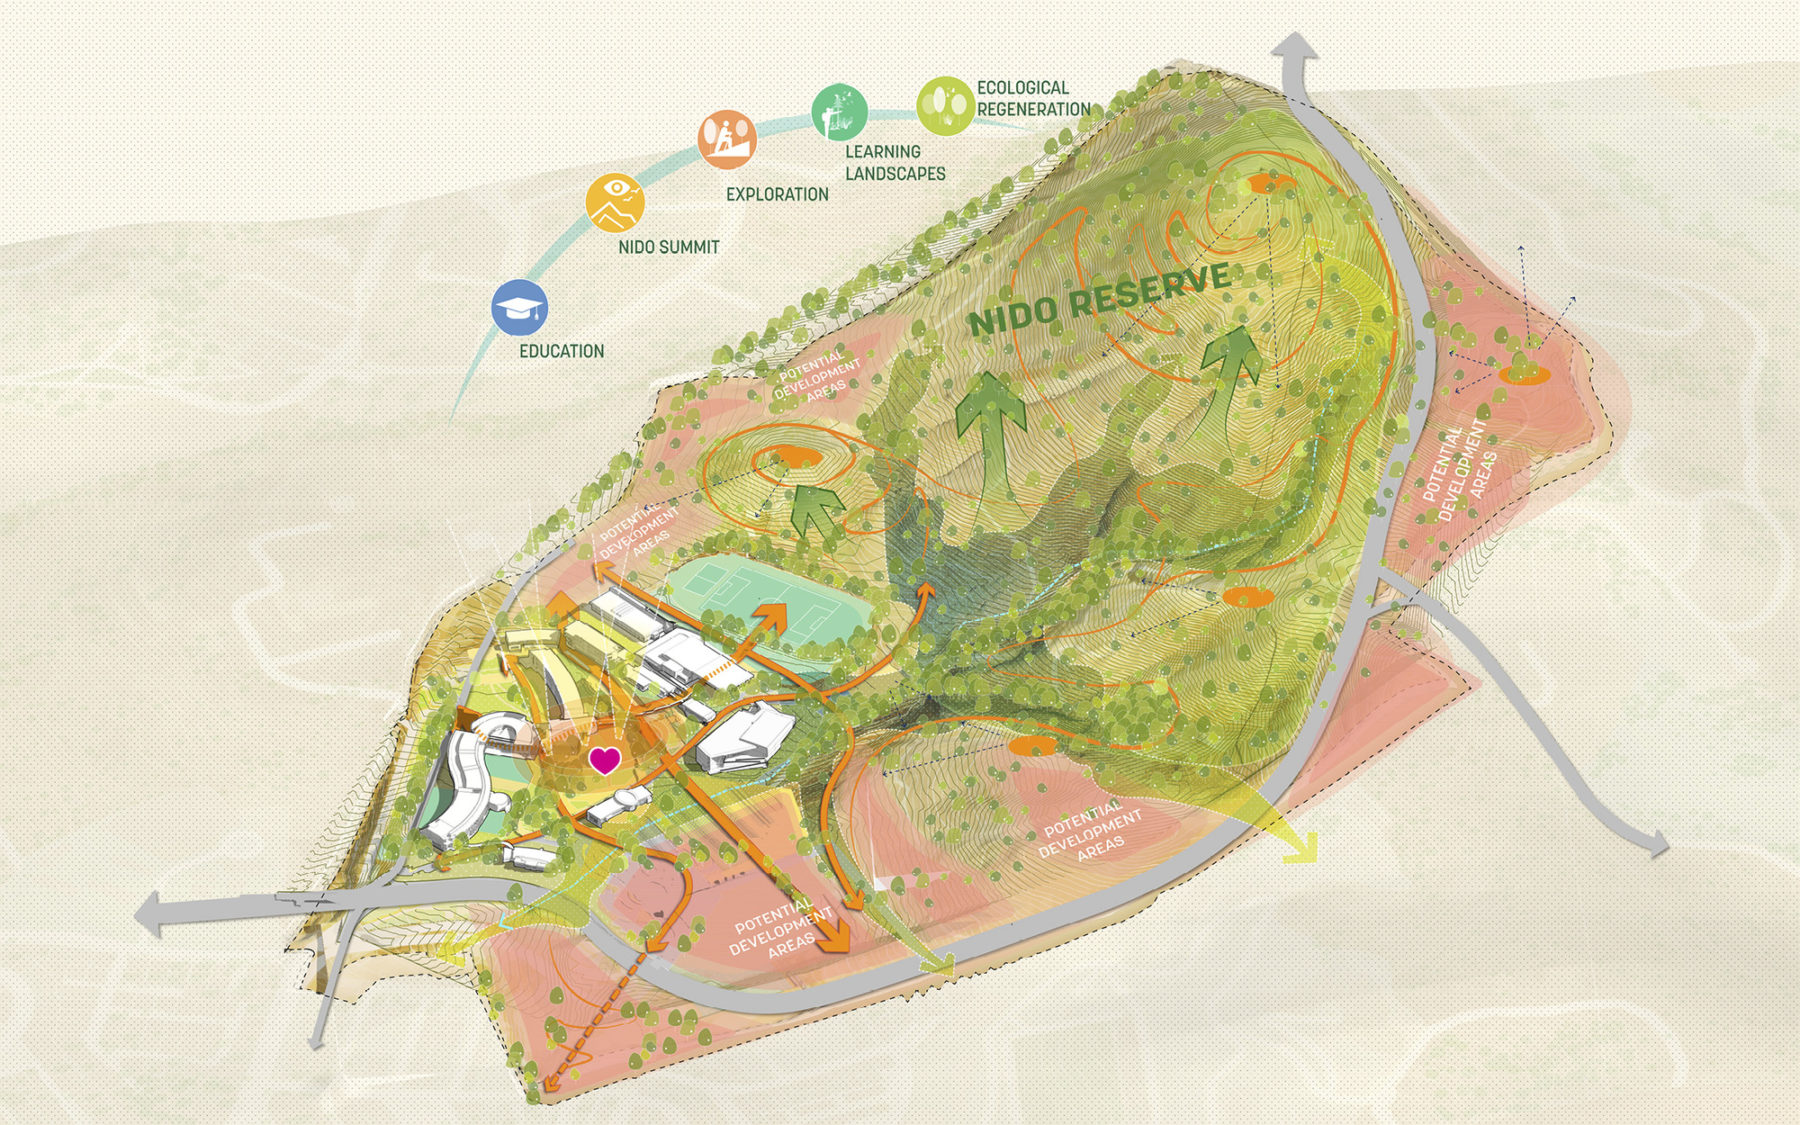 aerial axon diagram of campus highlighting potential development areas